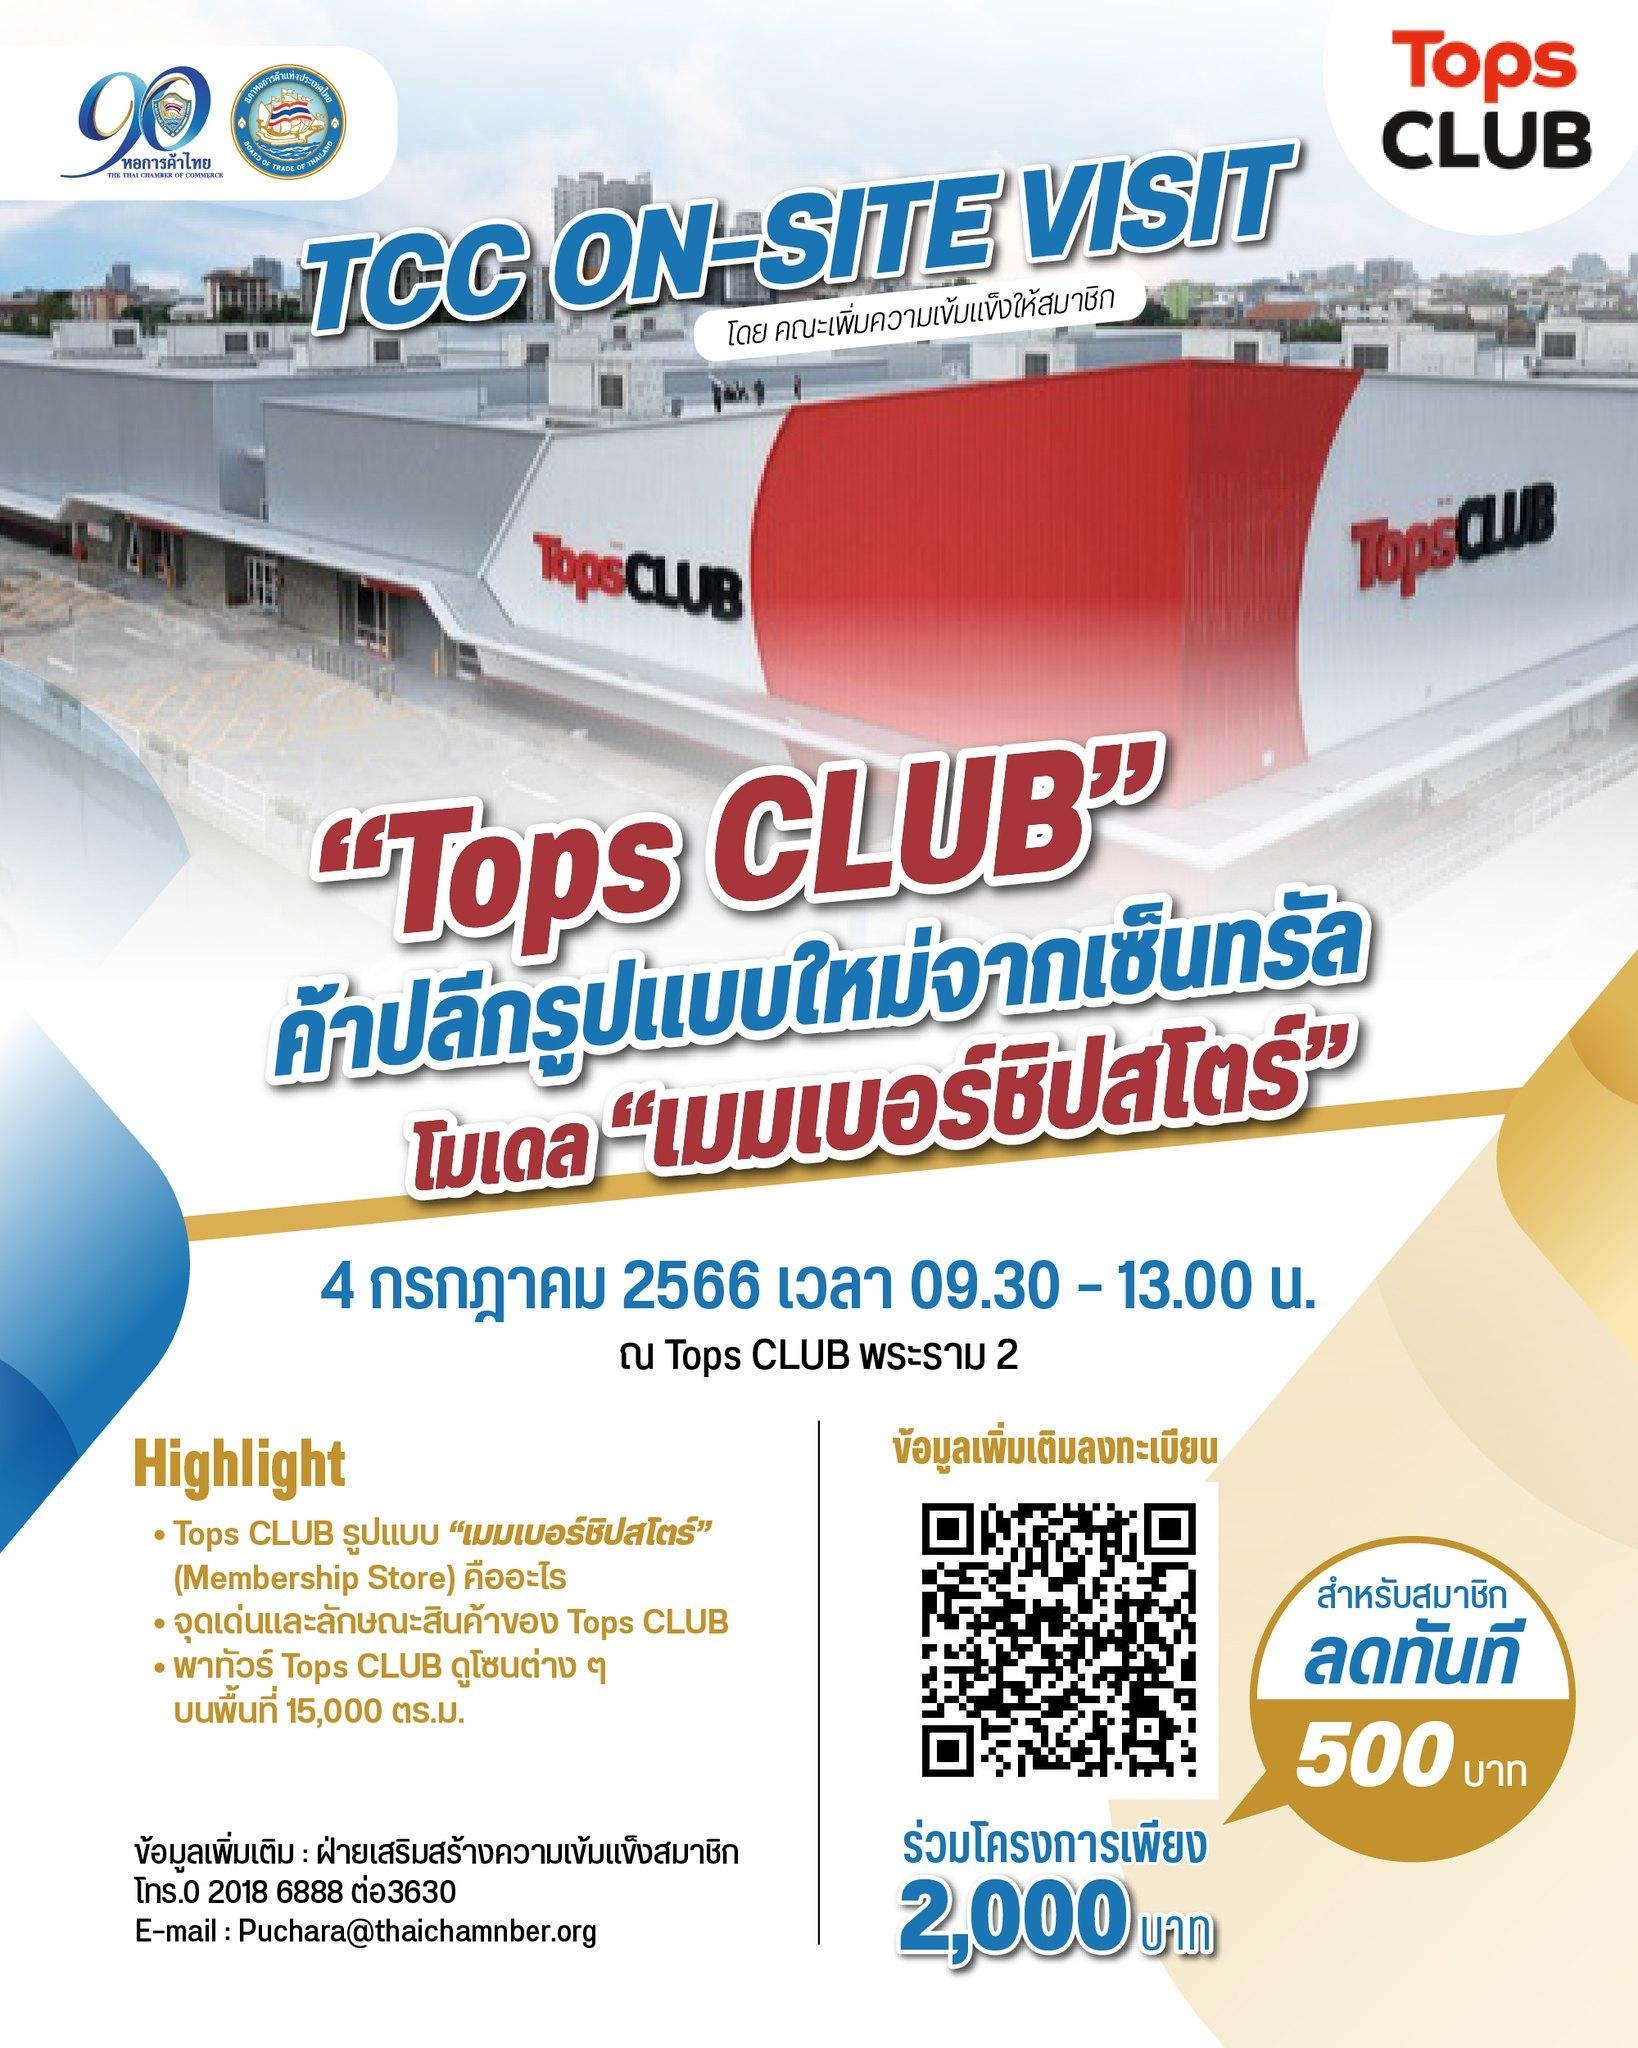 TCC On-site Visit @ Tops CLUB